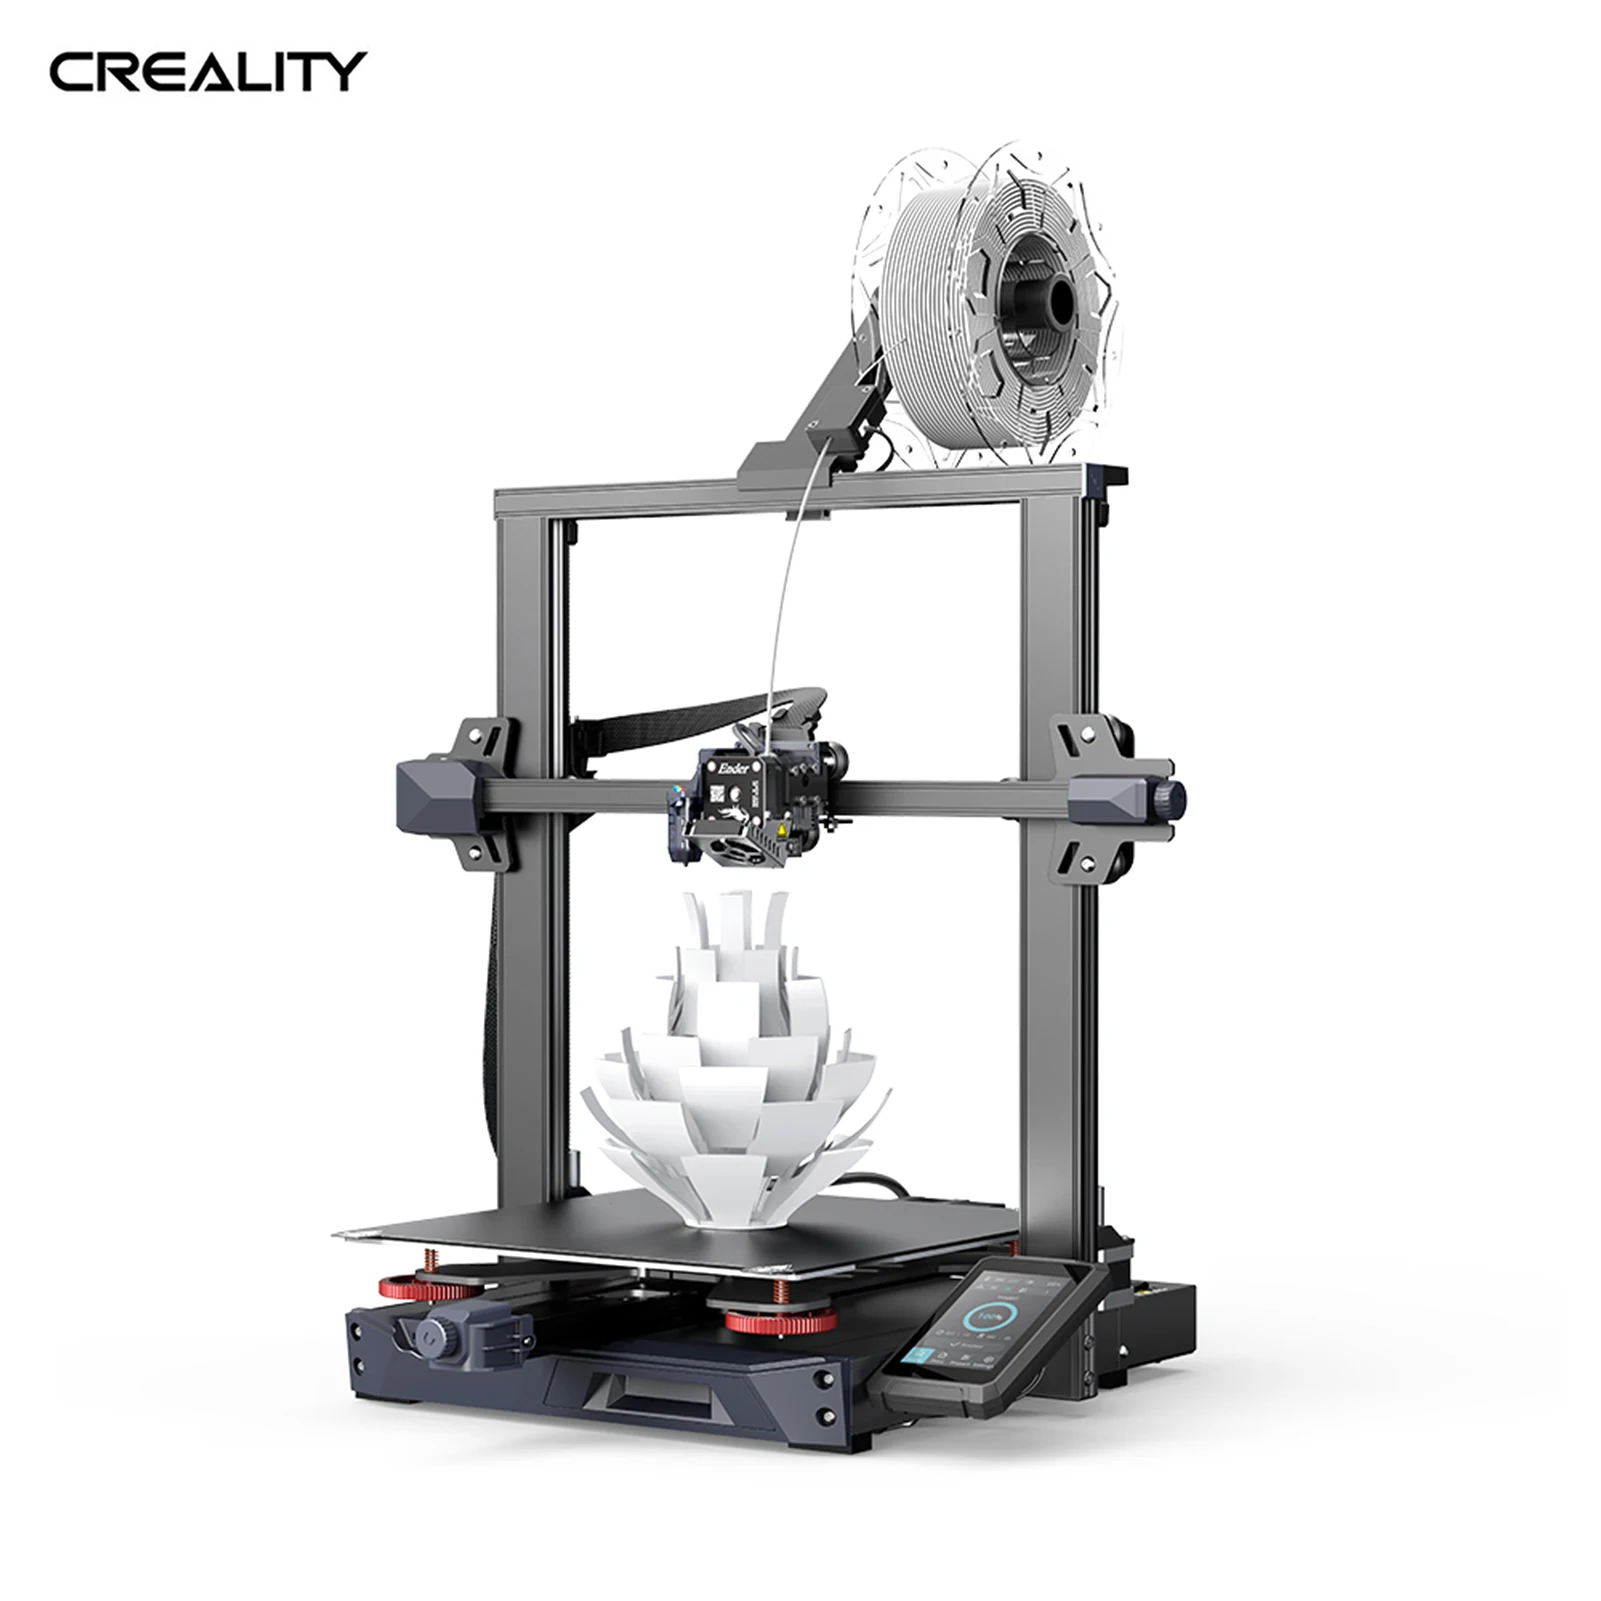 Creality Ender 3 S1 Pro 3d Printer  Ender 2 Creality 3d Printer - 3 S1  Plus 3d Printer- Aliexpress